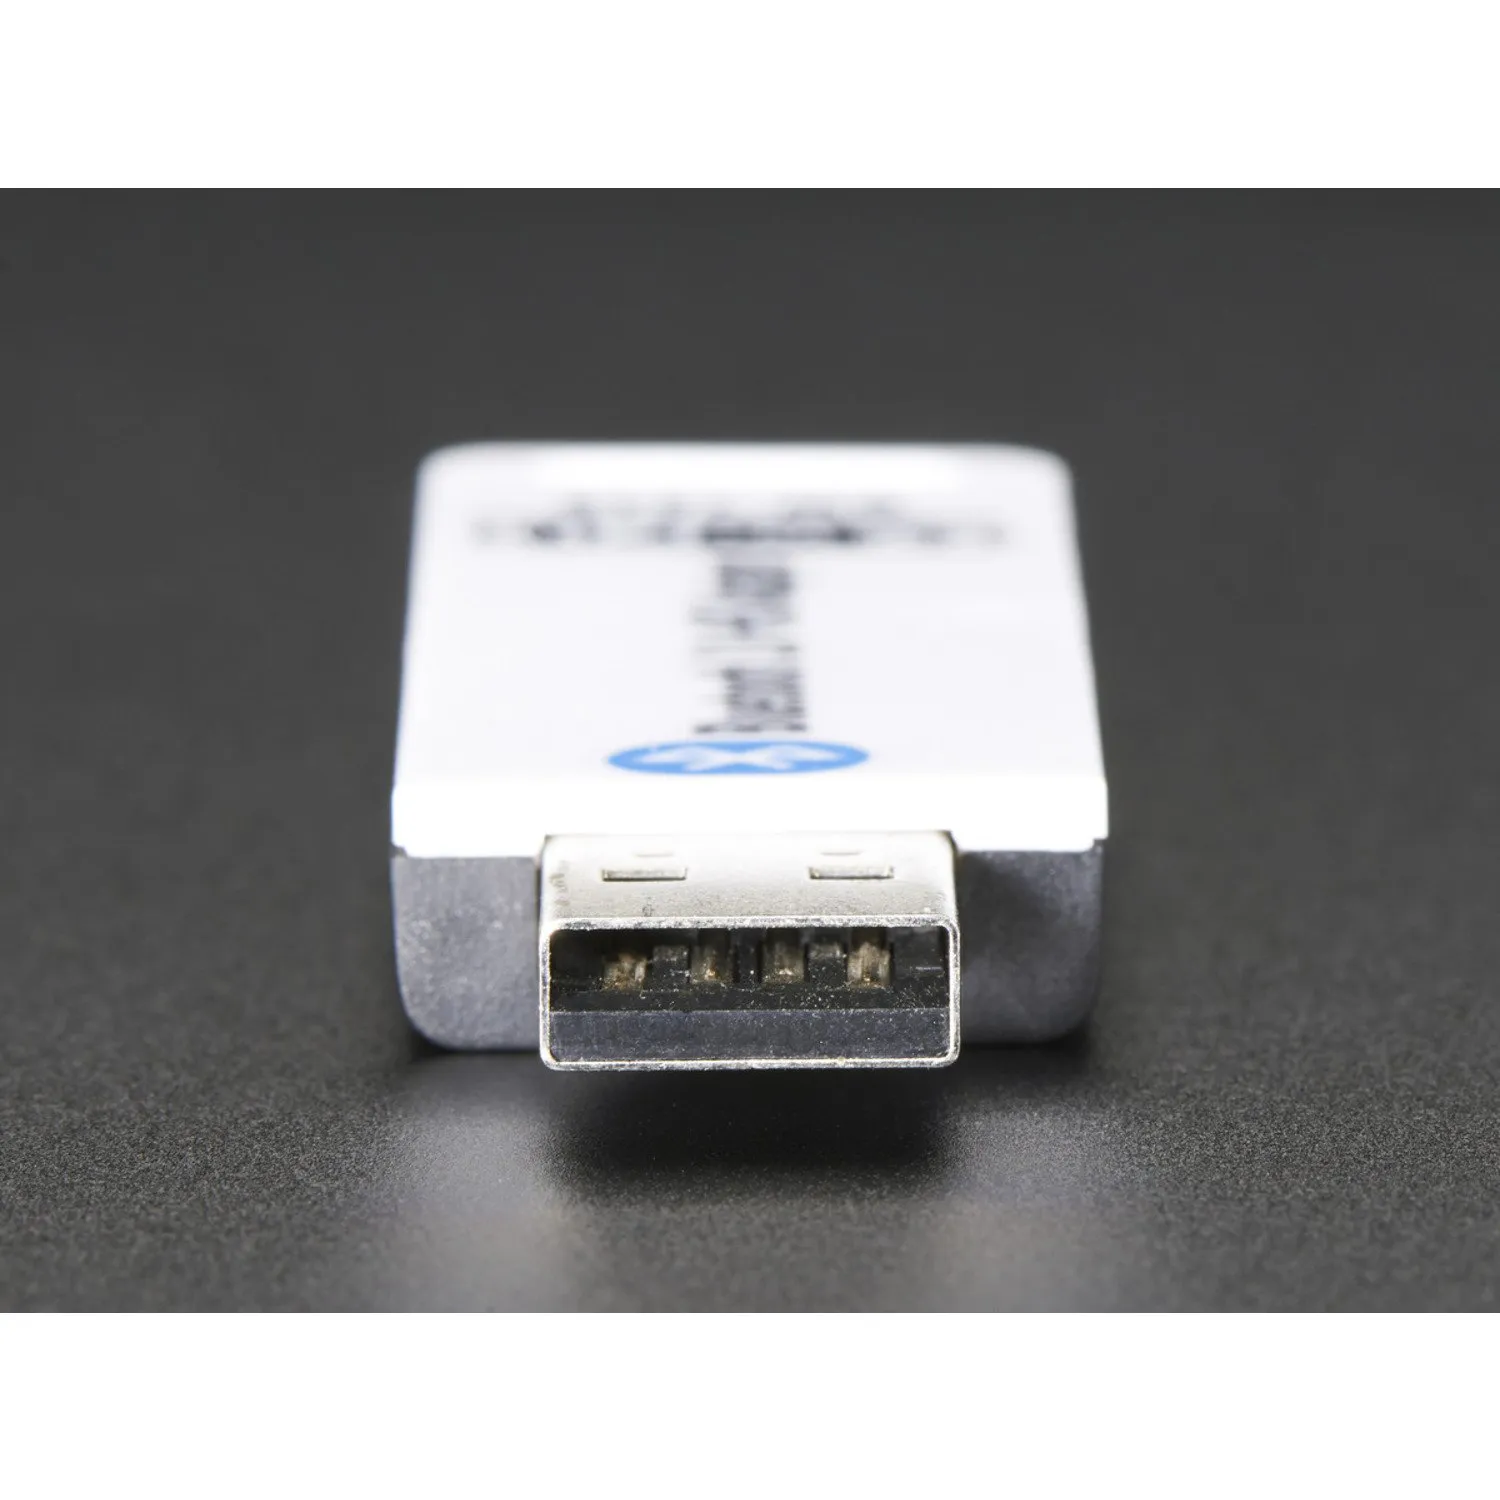 Photo of Bluetooth / WiFi Combination USB Dongle